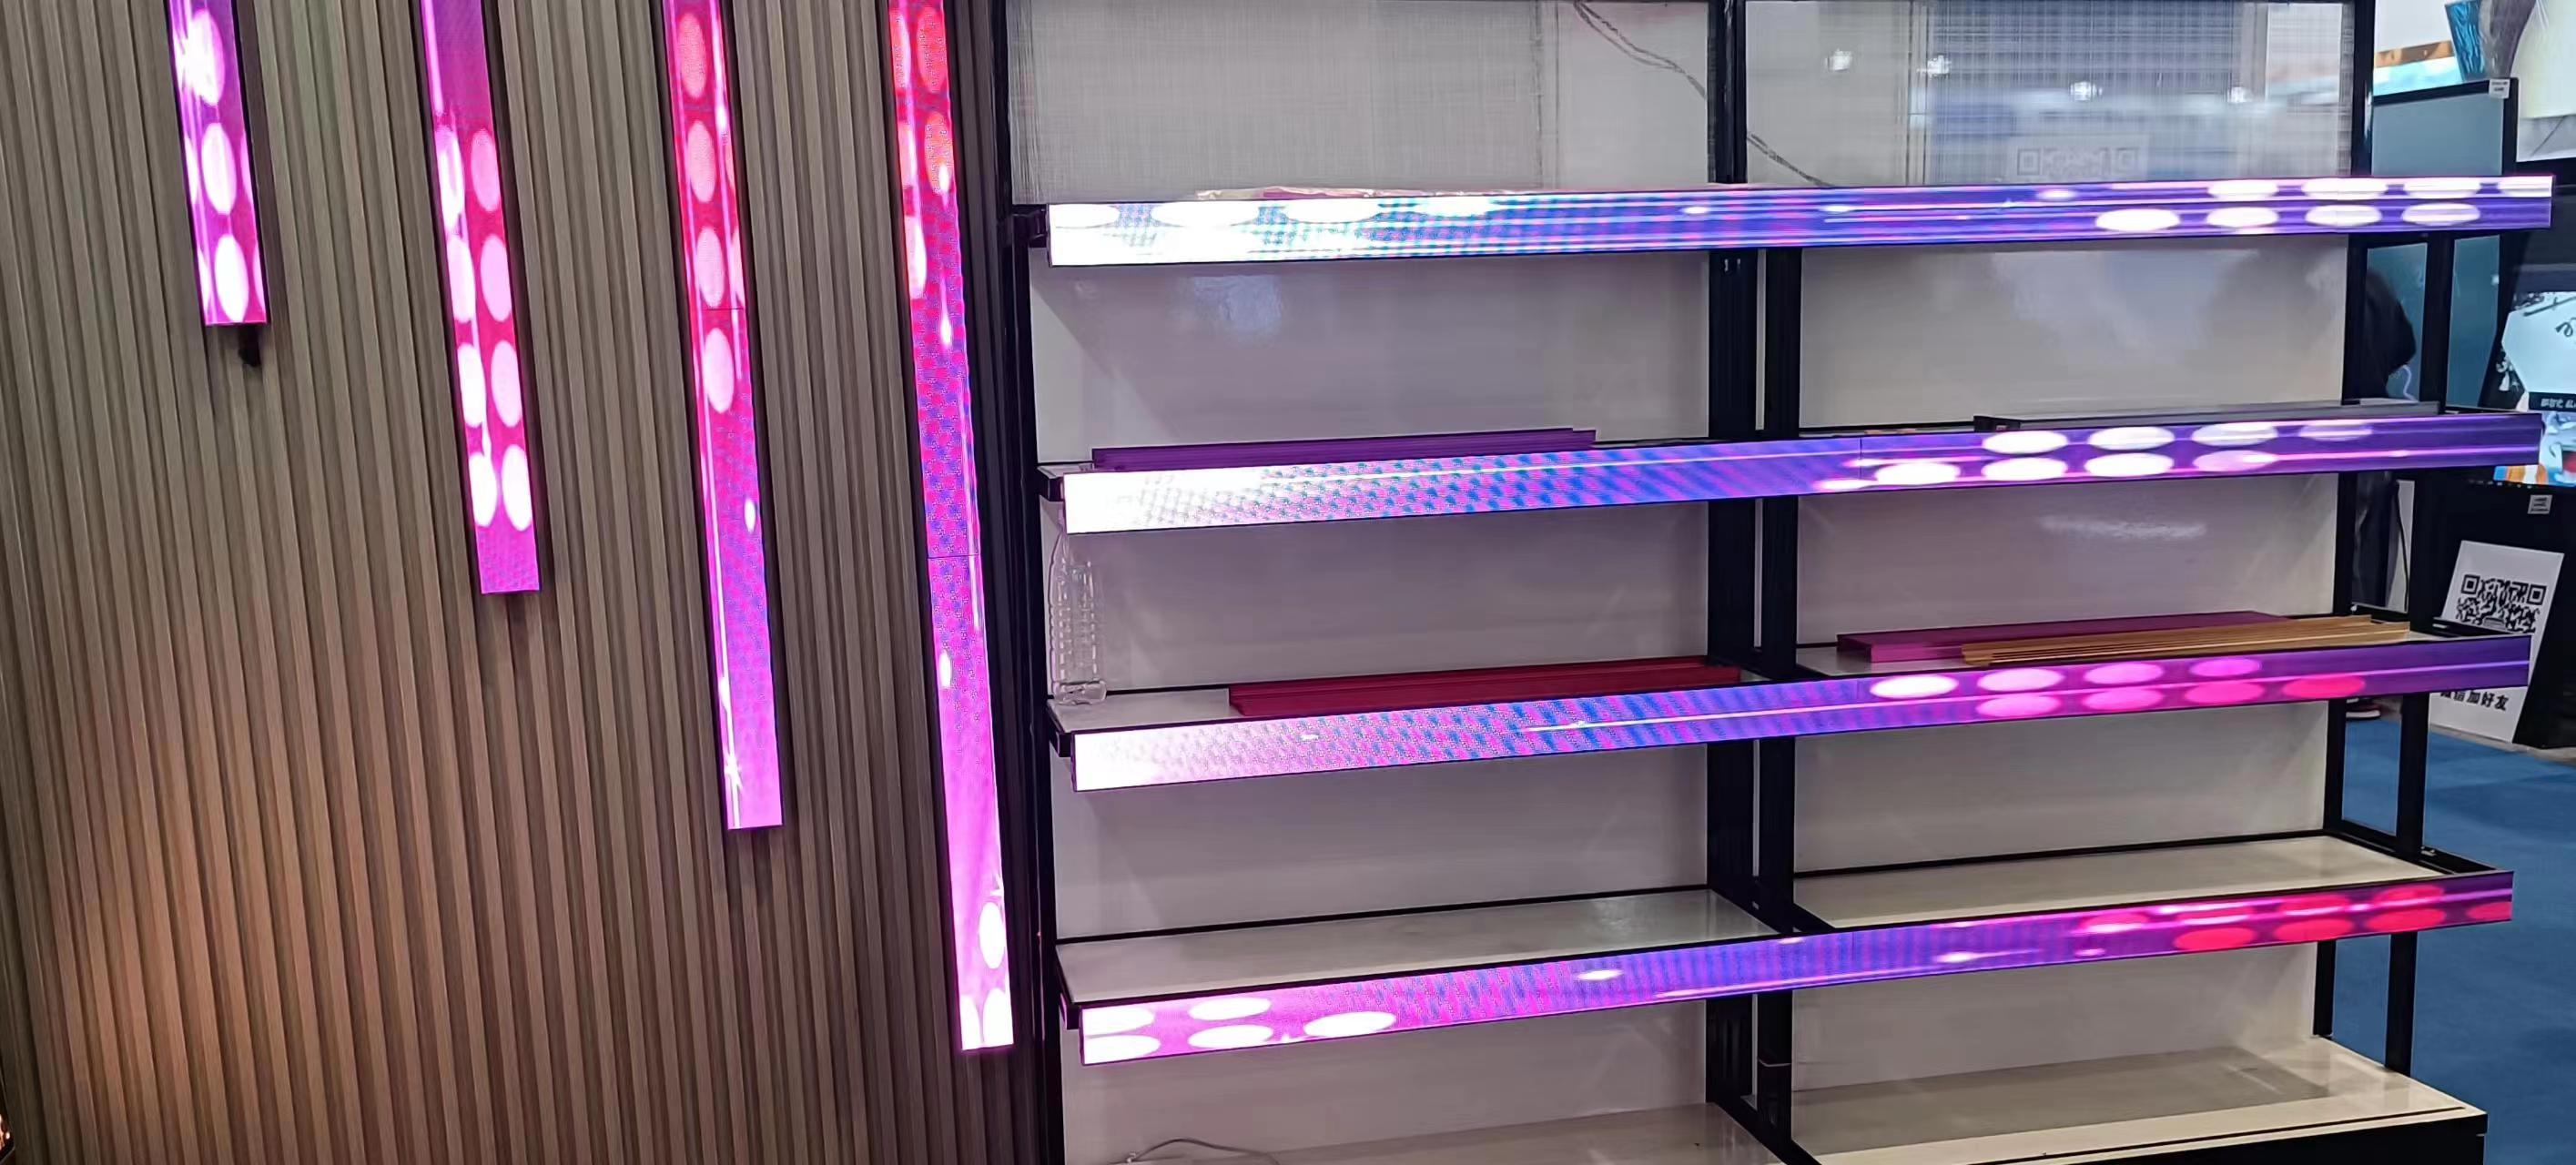 Shelf LED display